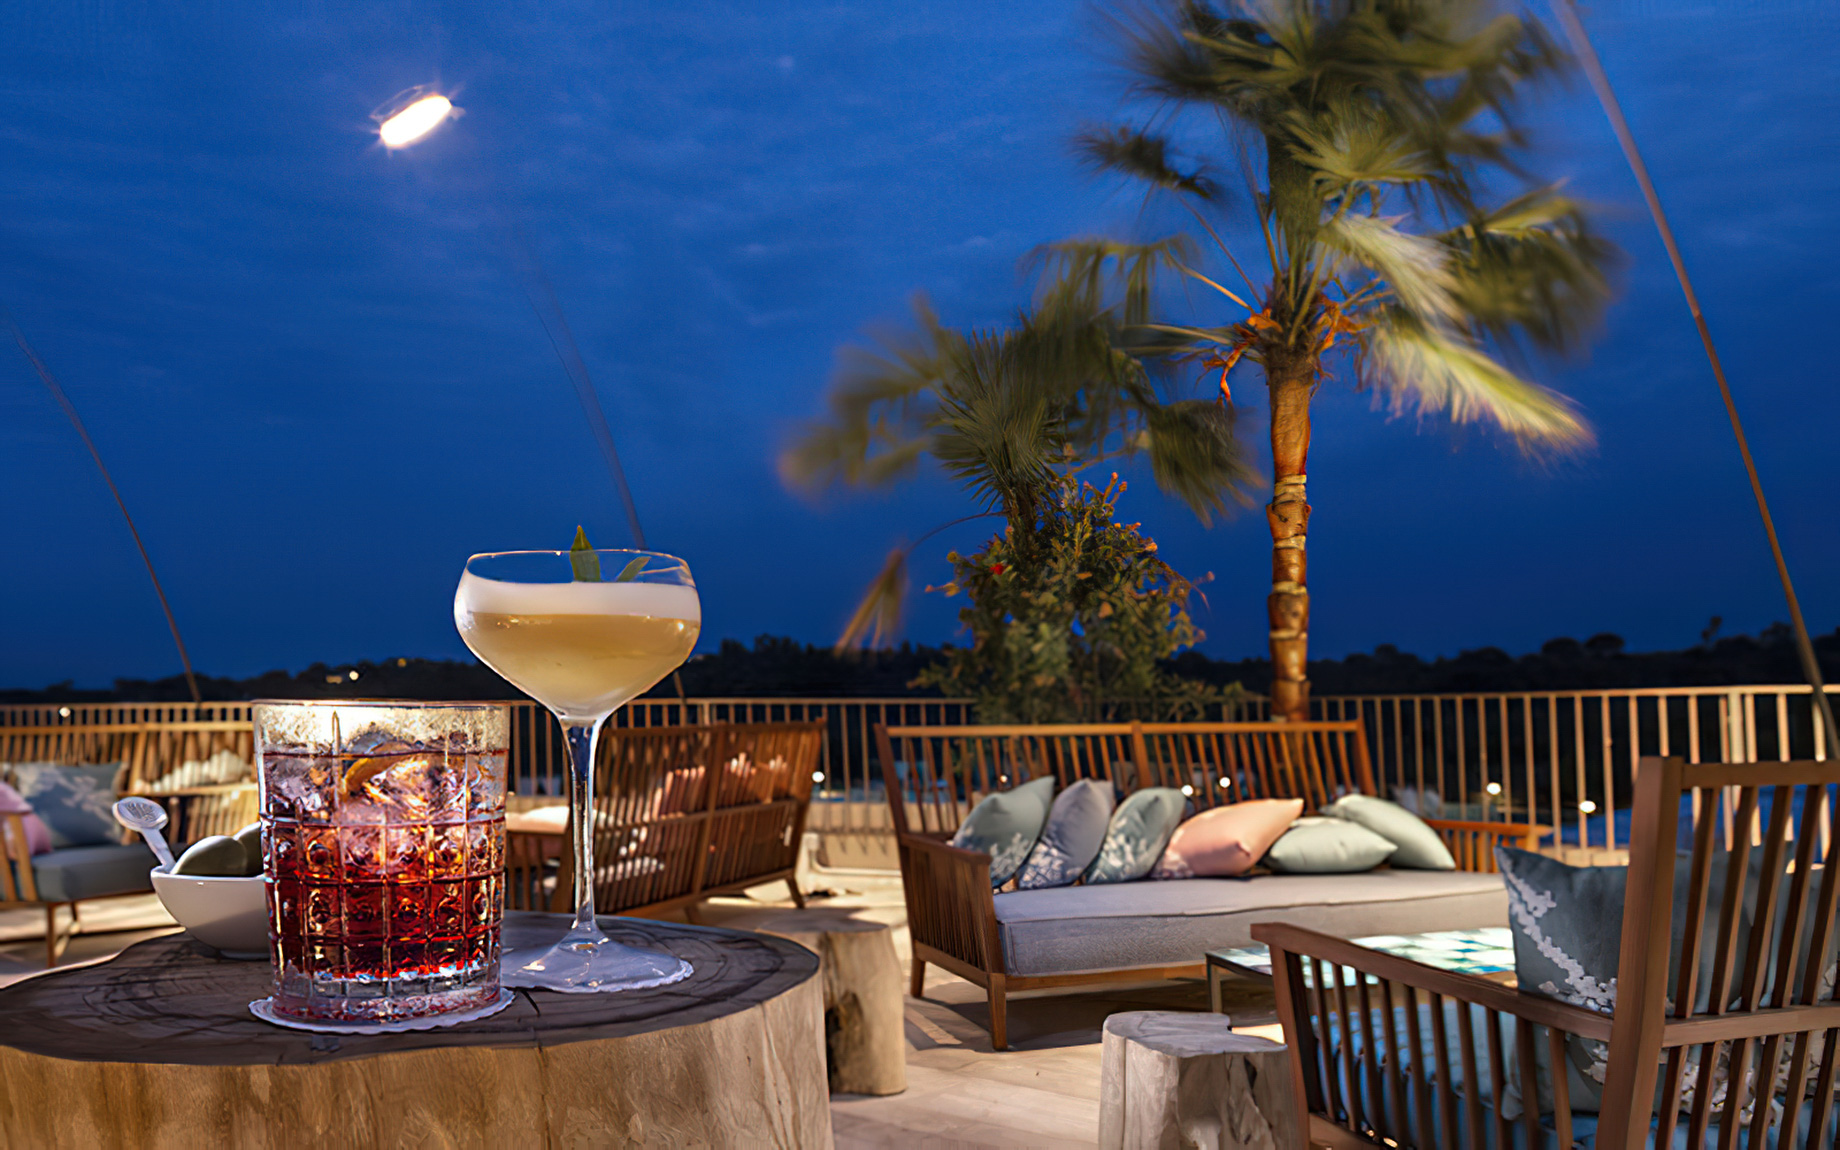 Baglioni Resort Sardinia – San Teodoro, Sardegna, Italy – Sunsert Terrace Bar Night